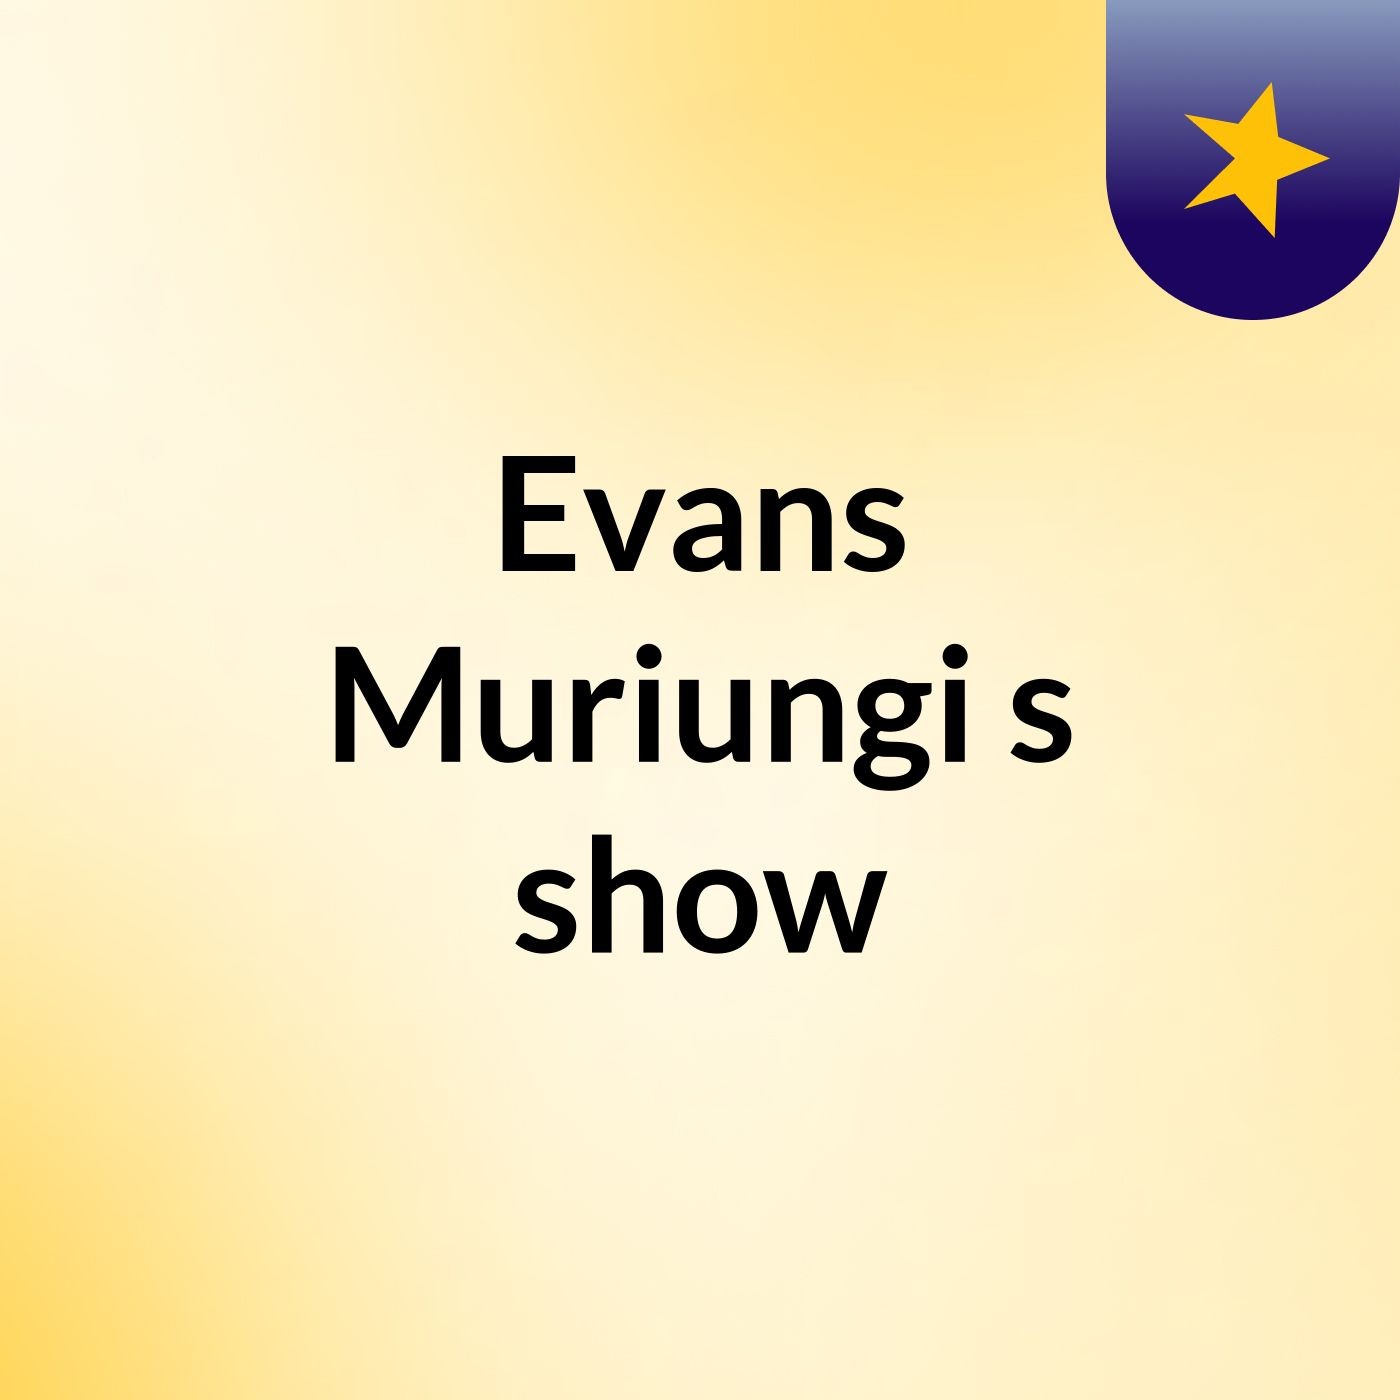 Evans Muriungi's show